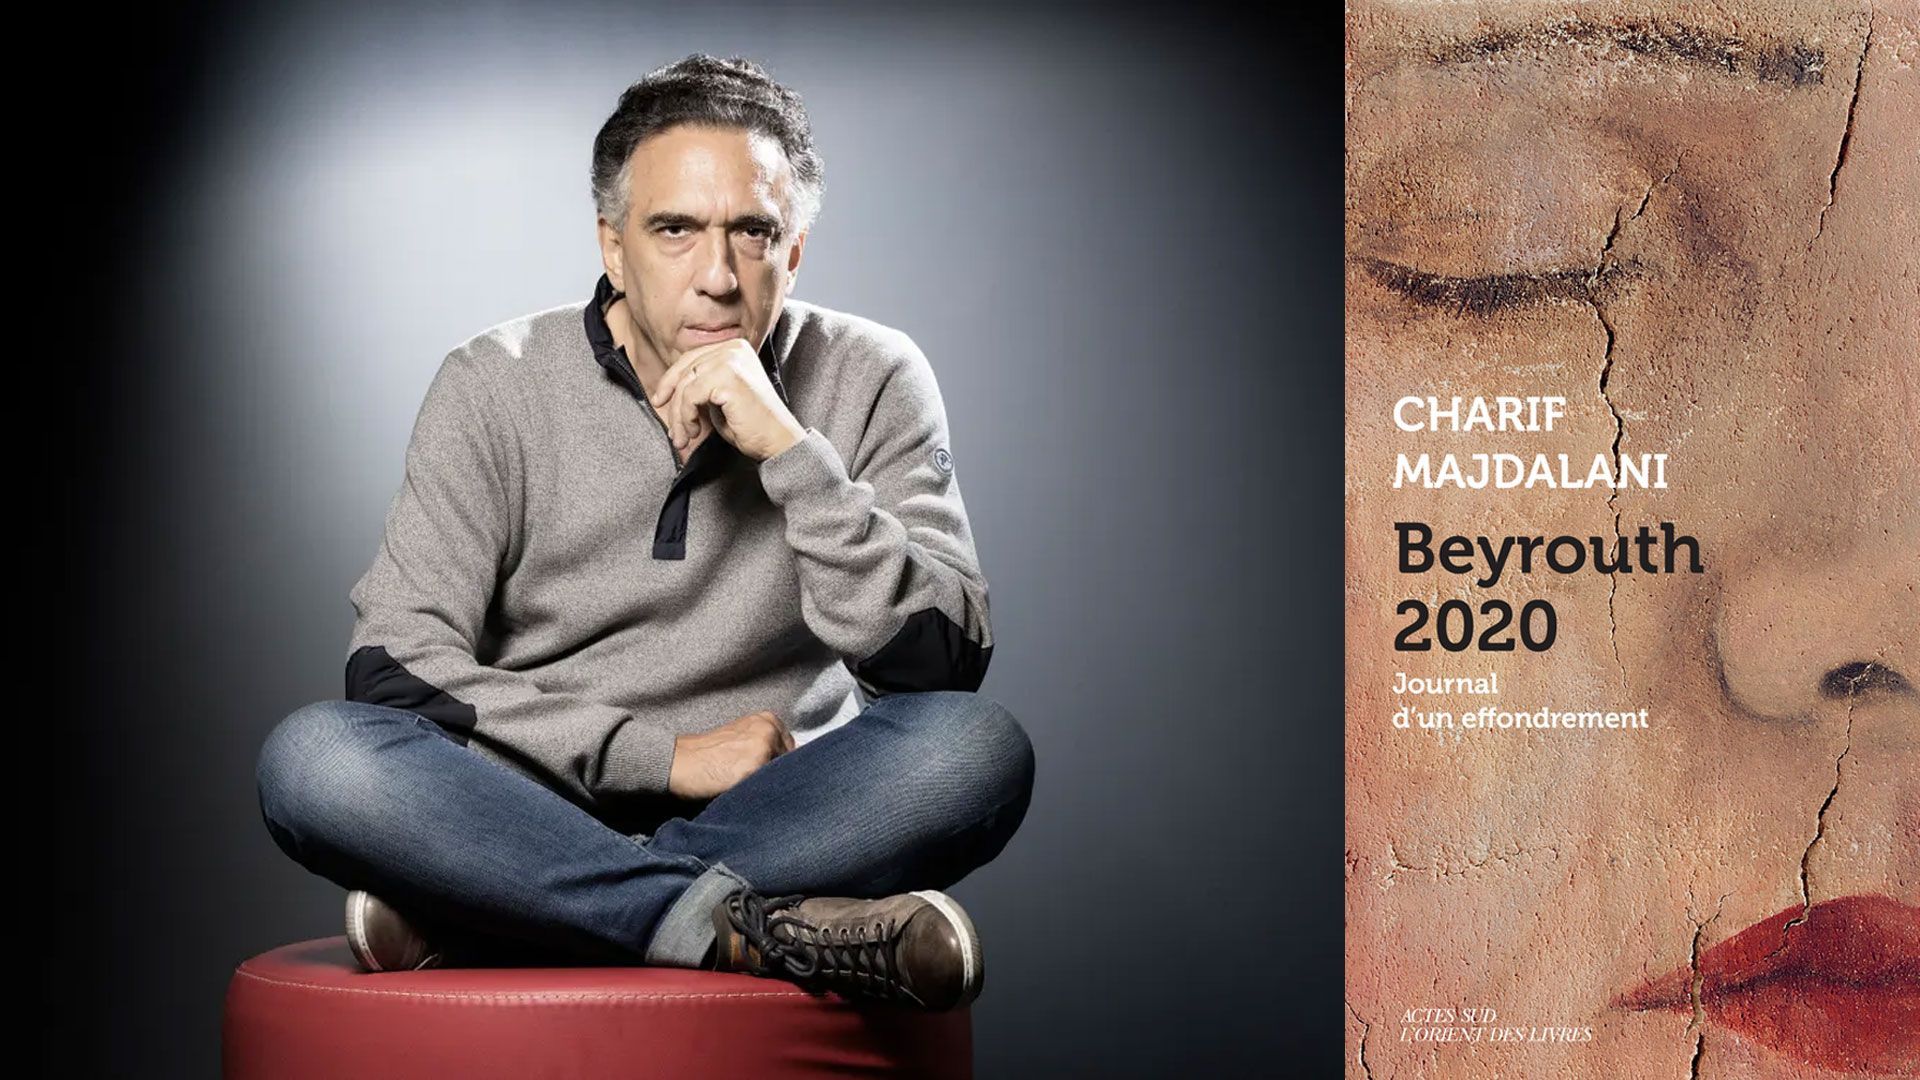 beyrouth-2020-journal-dun-effondrement-de-charif-majdalani-une-pierre-a-ledifice-branlant-du-liban